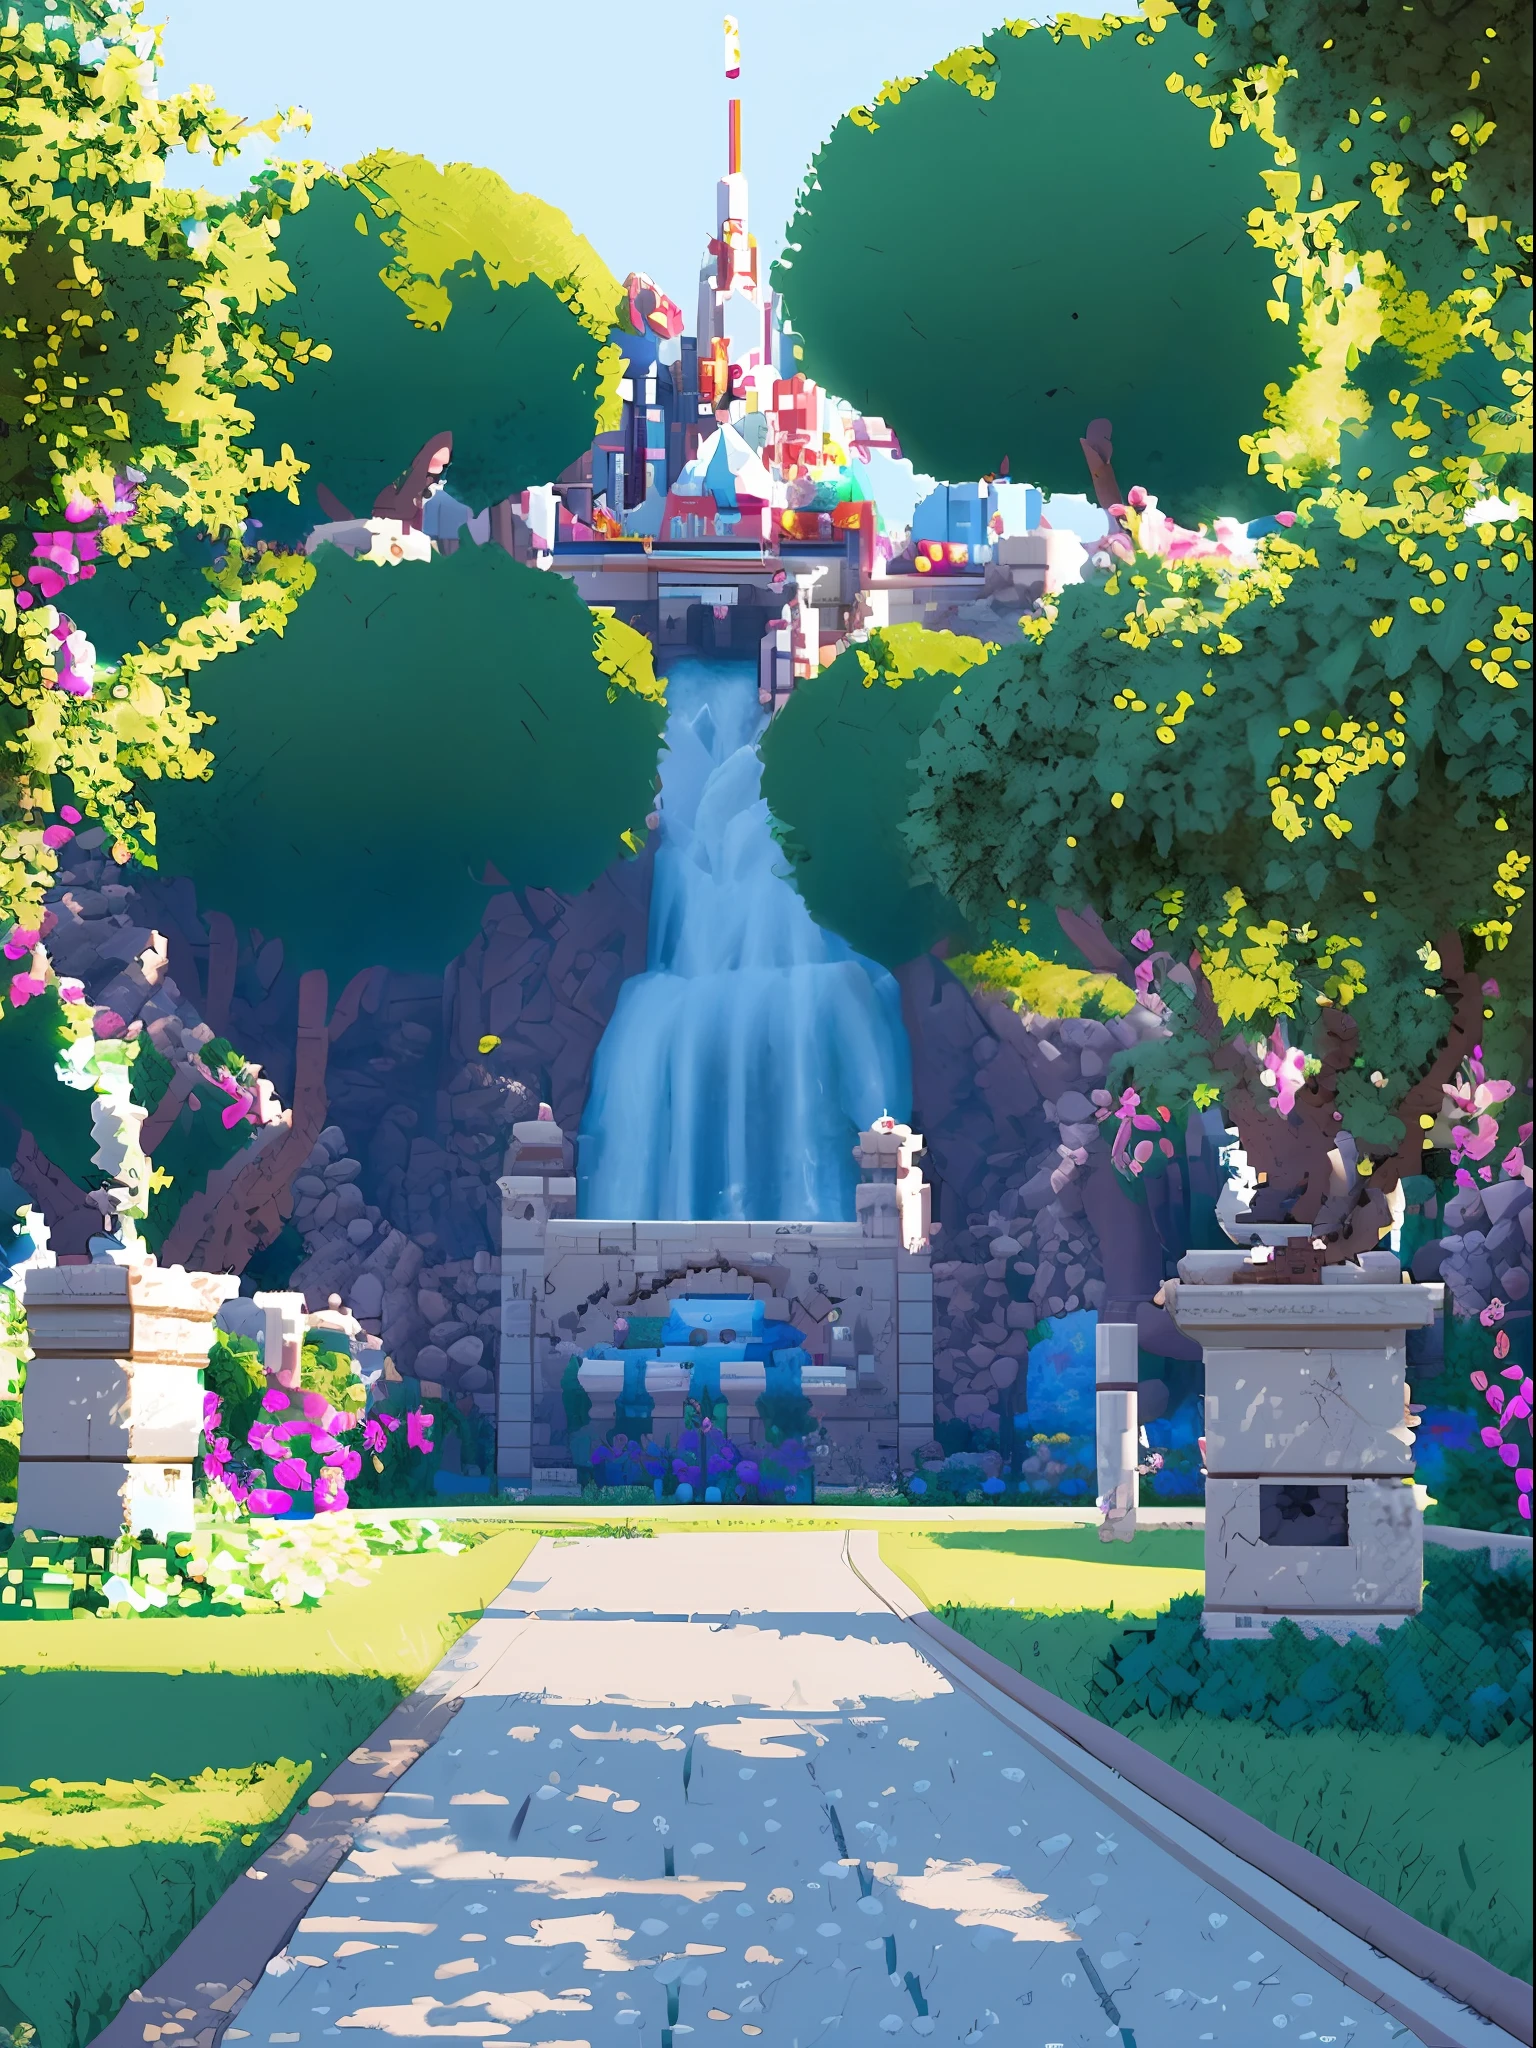 ((breathtaking pixel art:1.2), (ultra-realistic park scenery:1.1)), Princess Peach waving hello